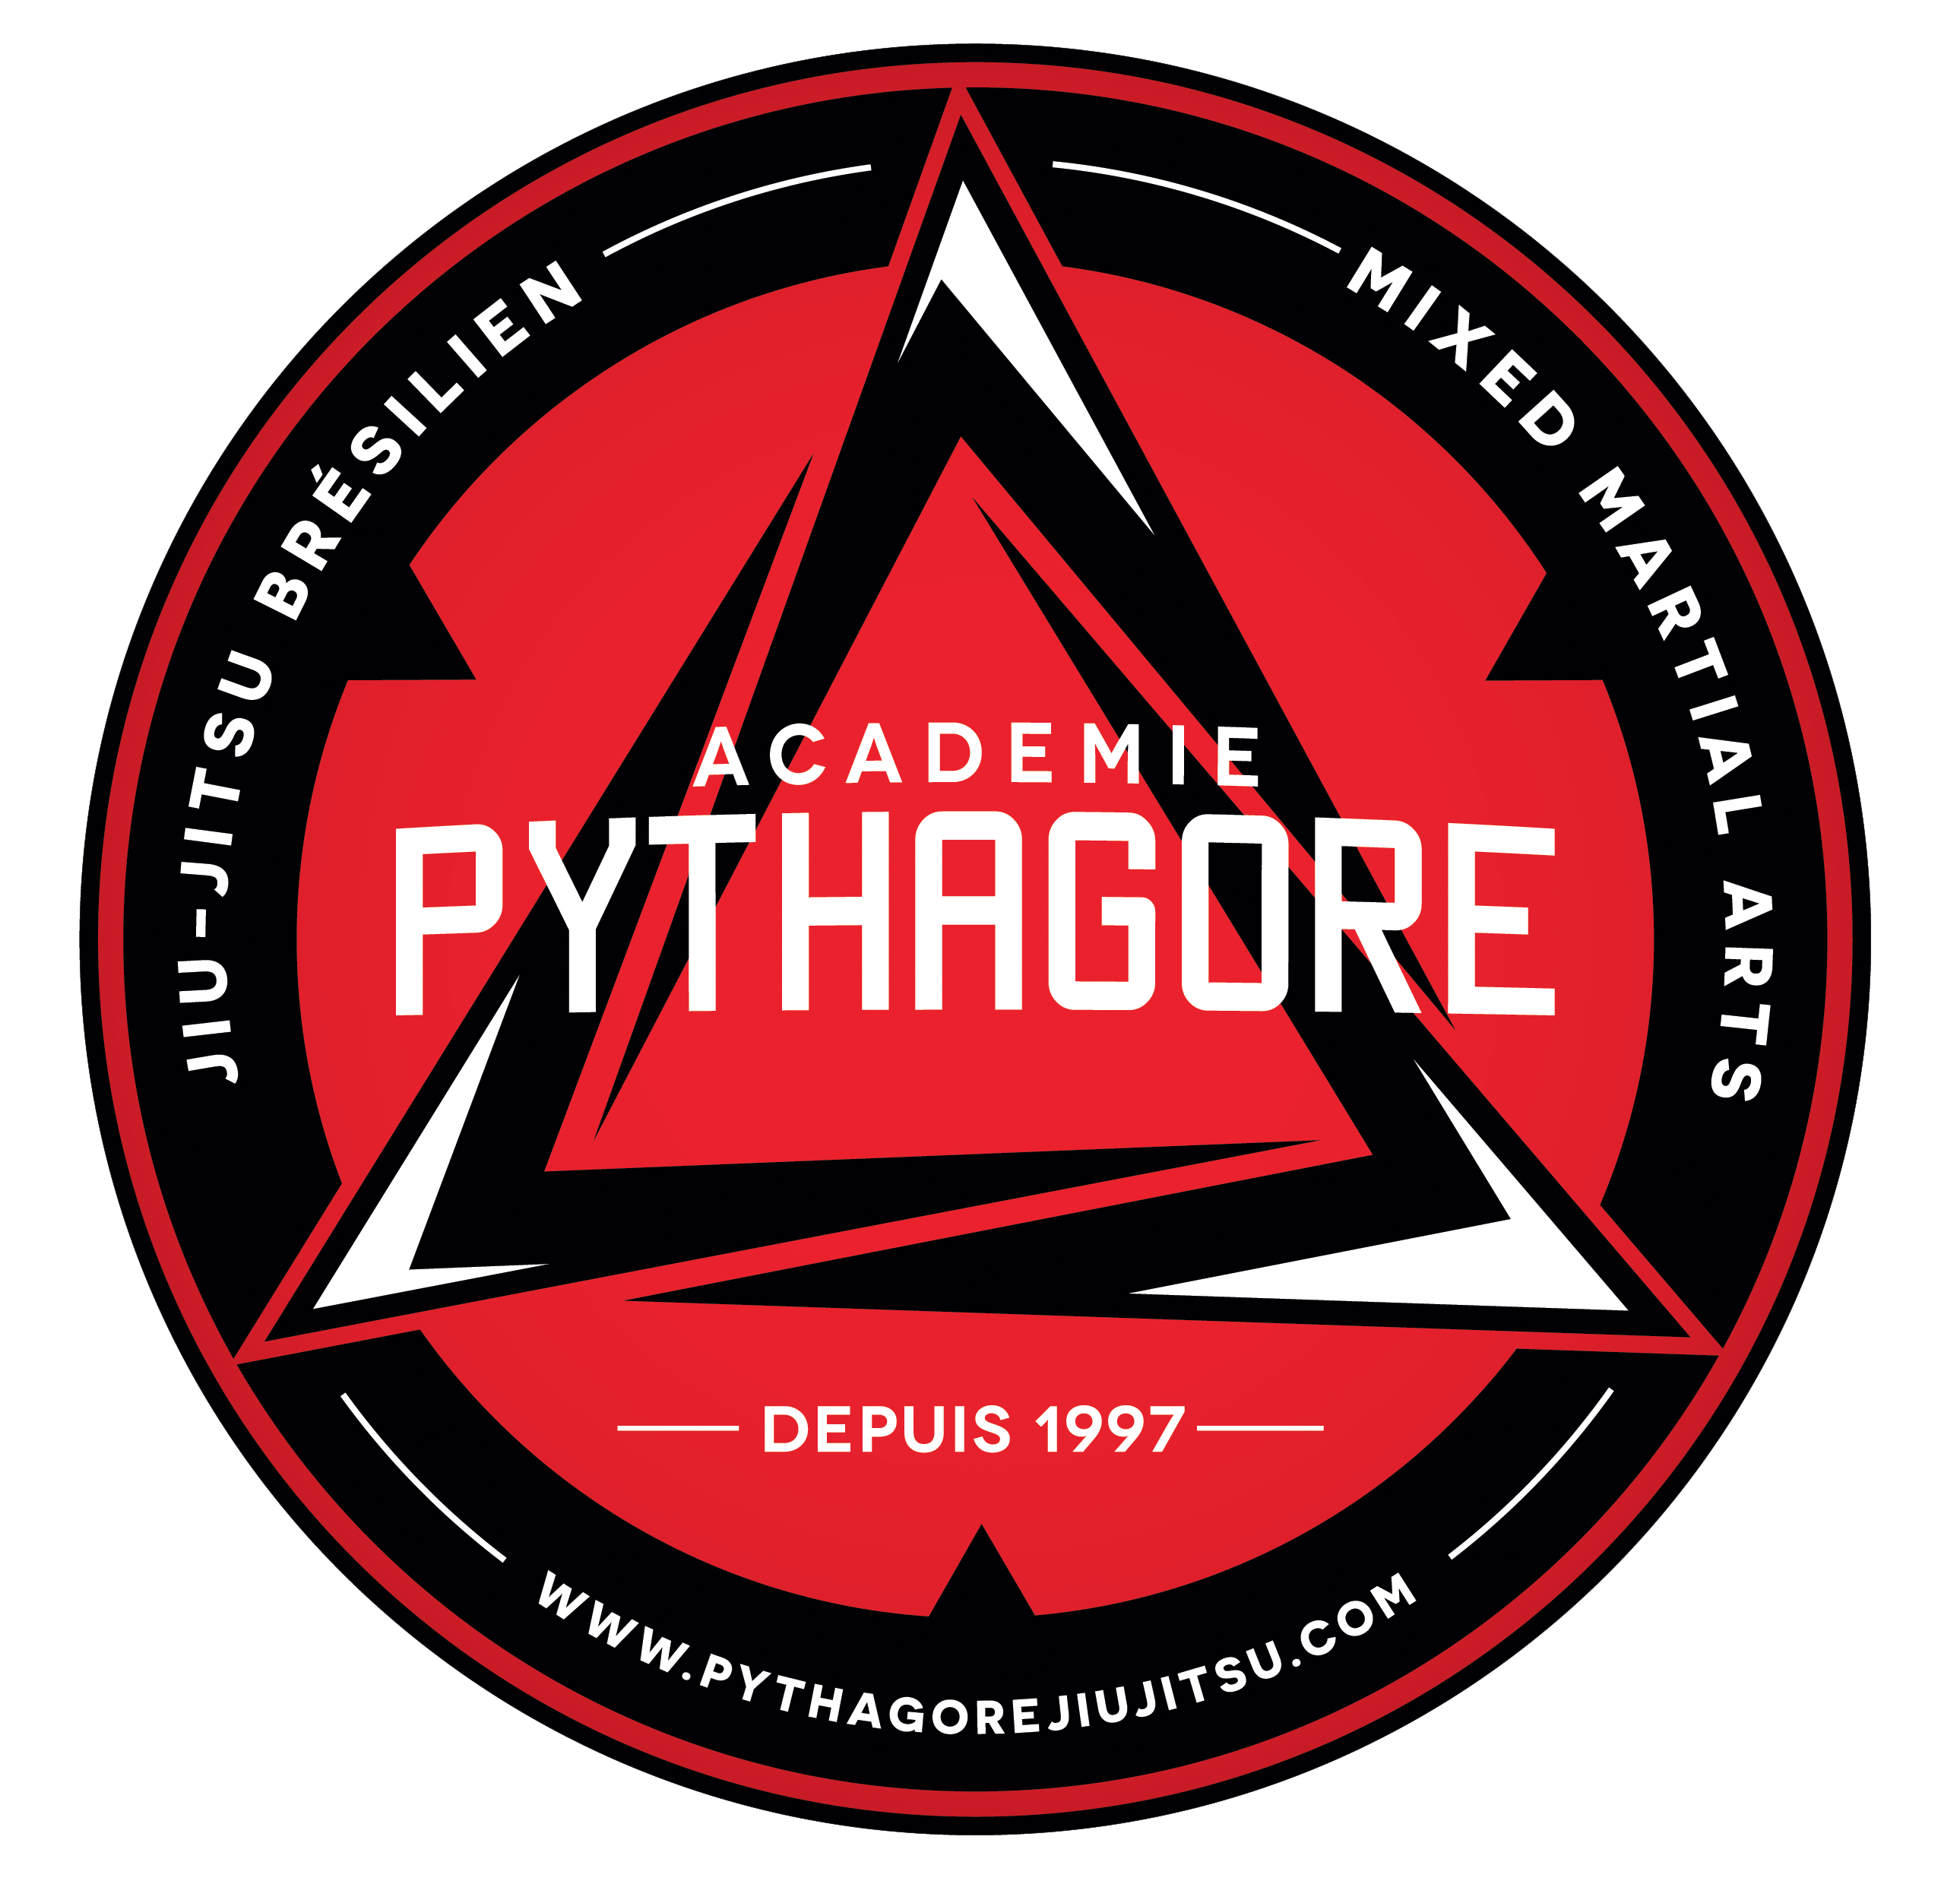 Académie Pythagore - Jiu Jitsu Brésilien et Mixed Martial Arts (M.M.A)